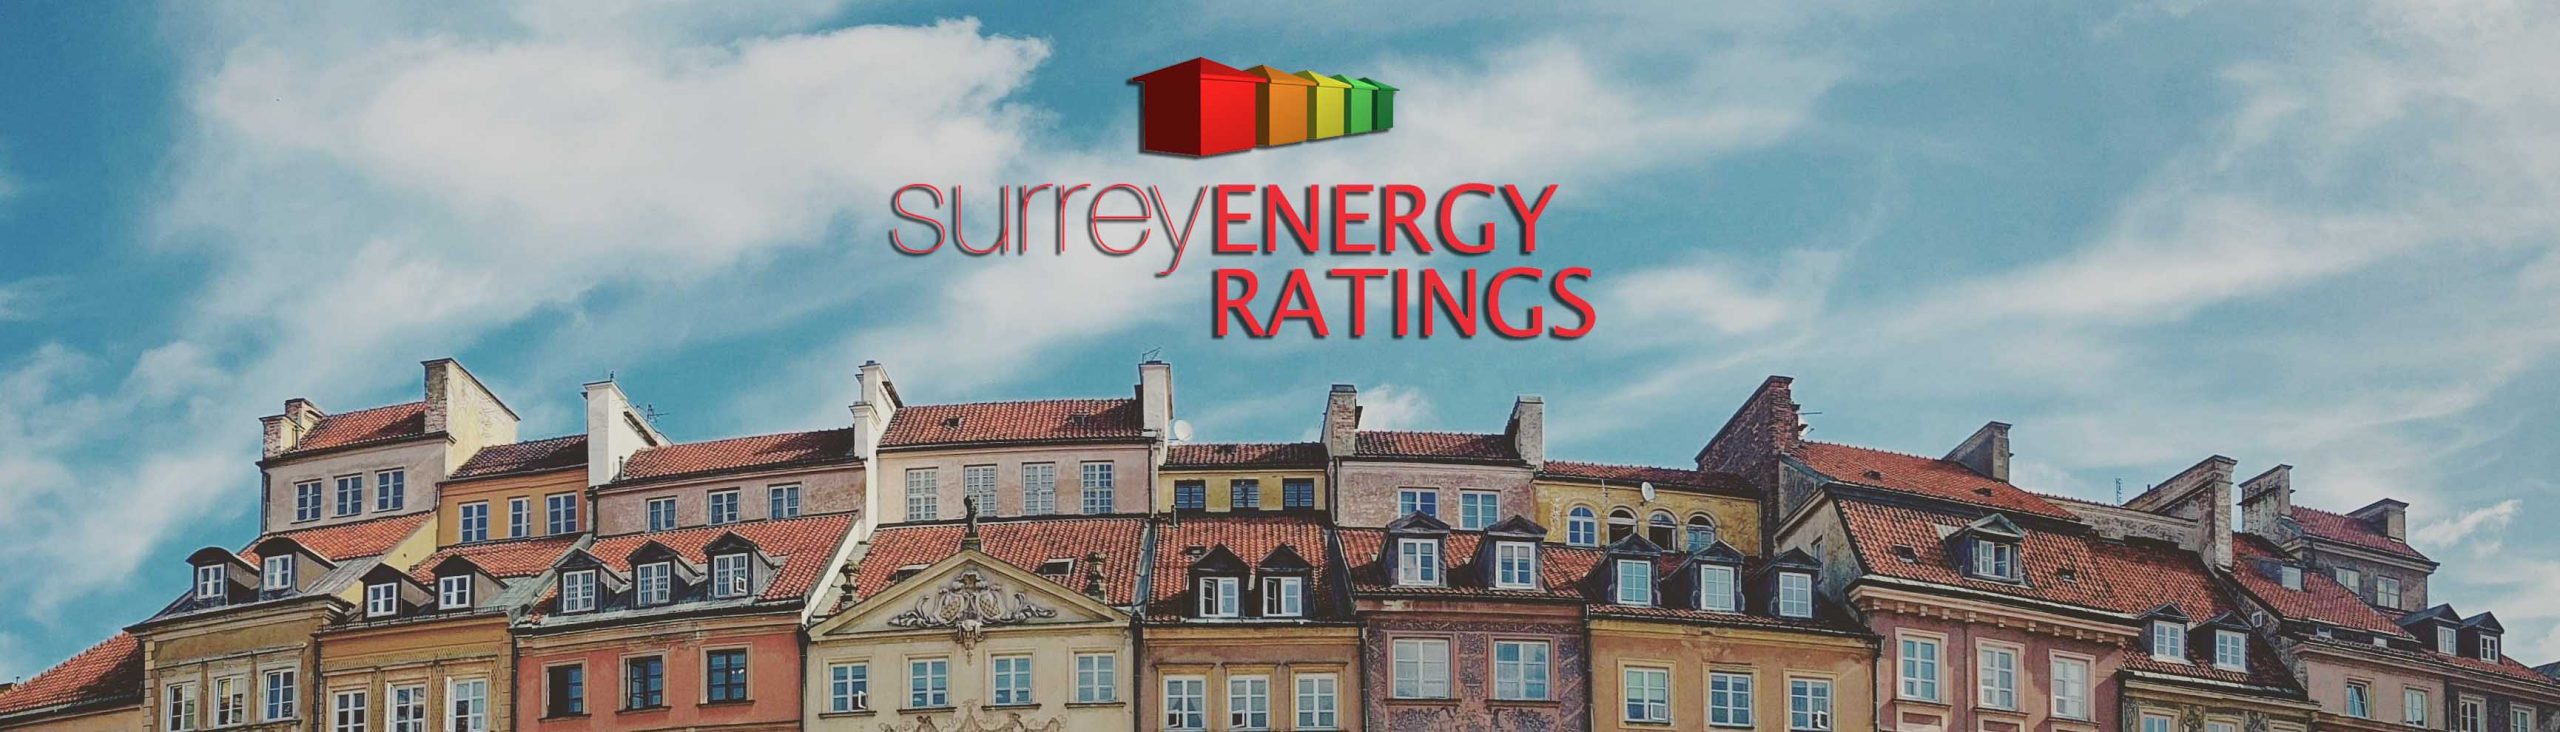 Surrey Energy Ratings